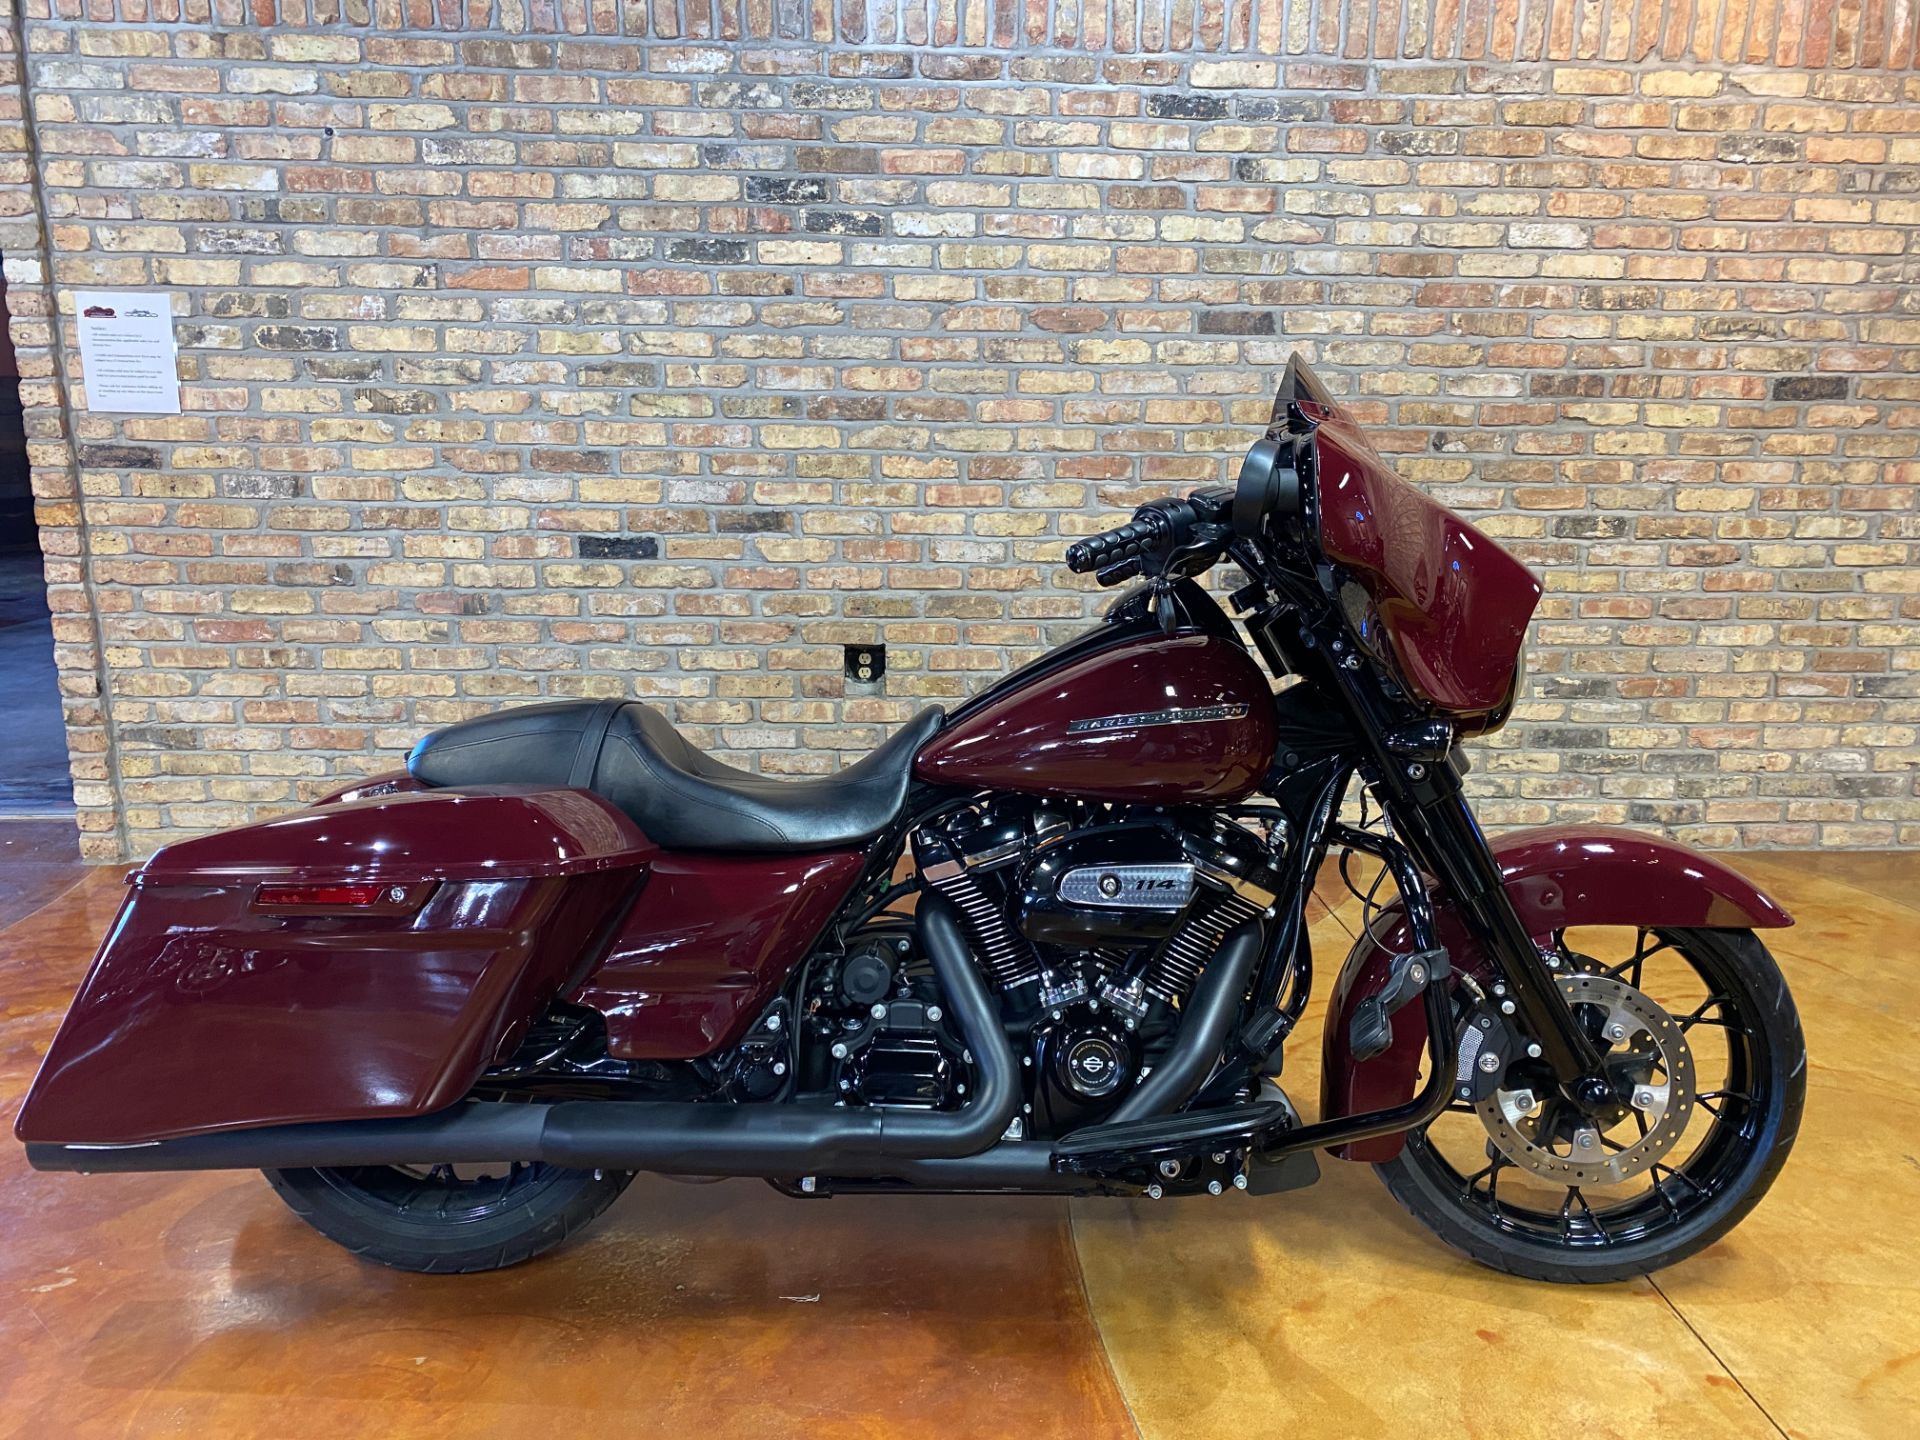 2020 Harley-Davidson Street Glide® Special in Big Bend, Wisconsin - Photo 3